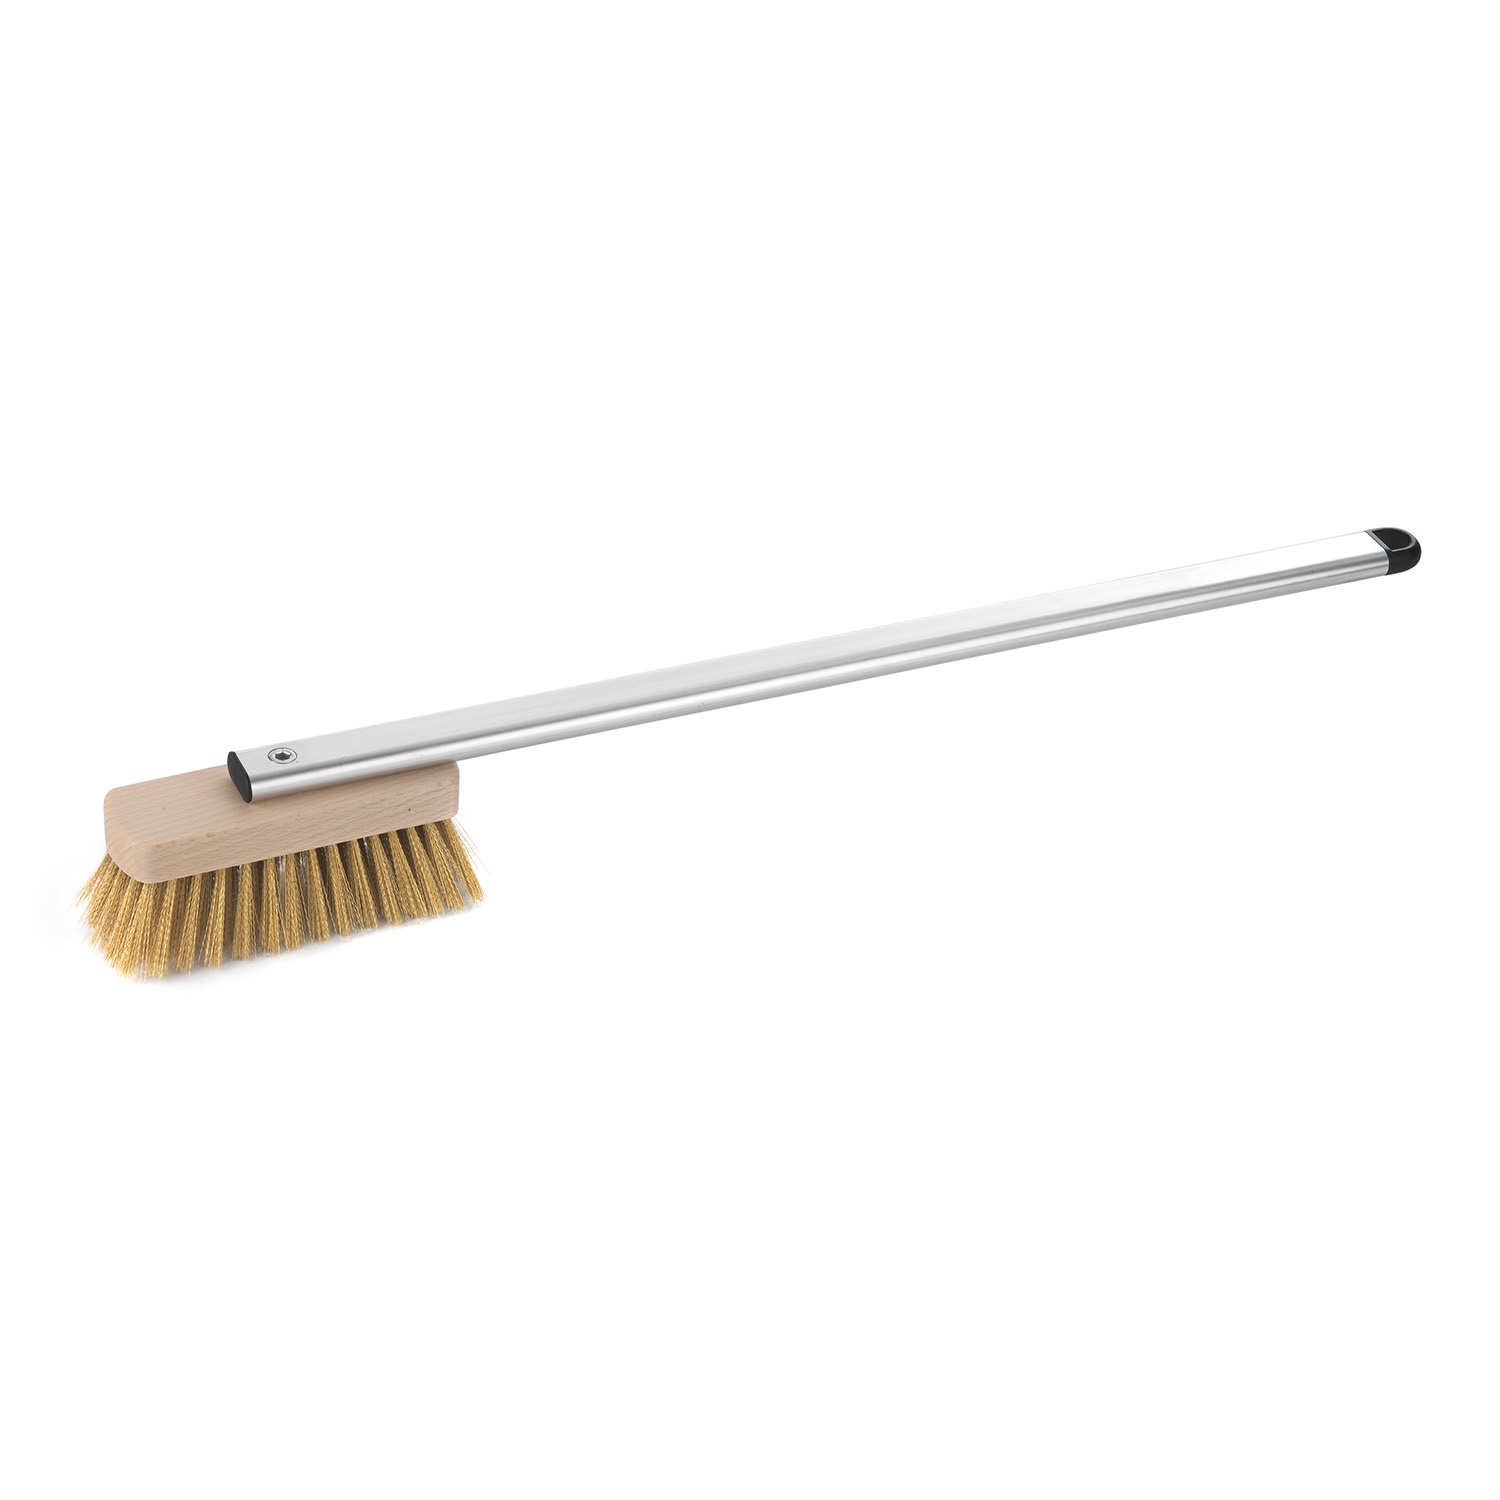 Brass bristle brush and adjustable head 60cm - GI Metal